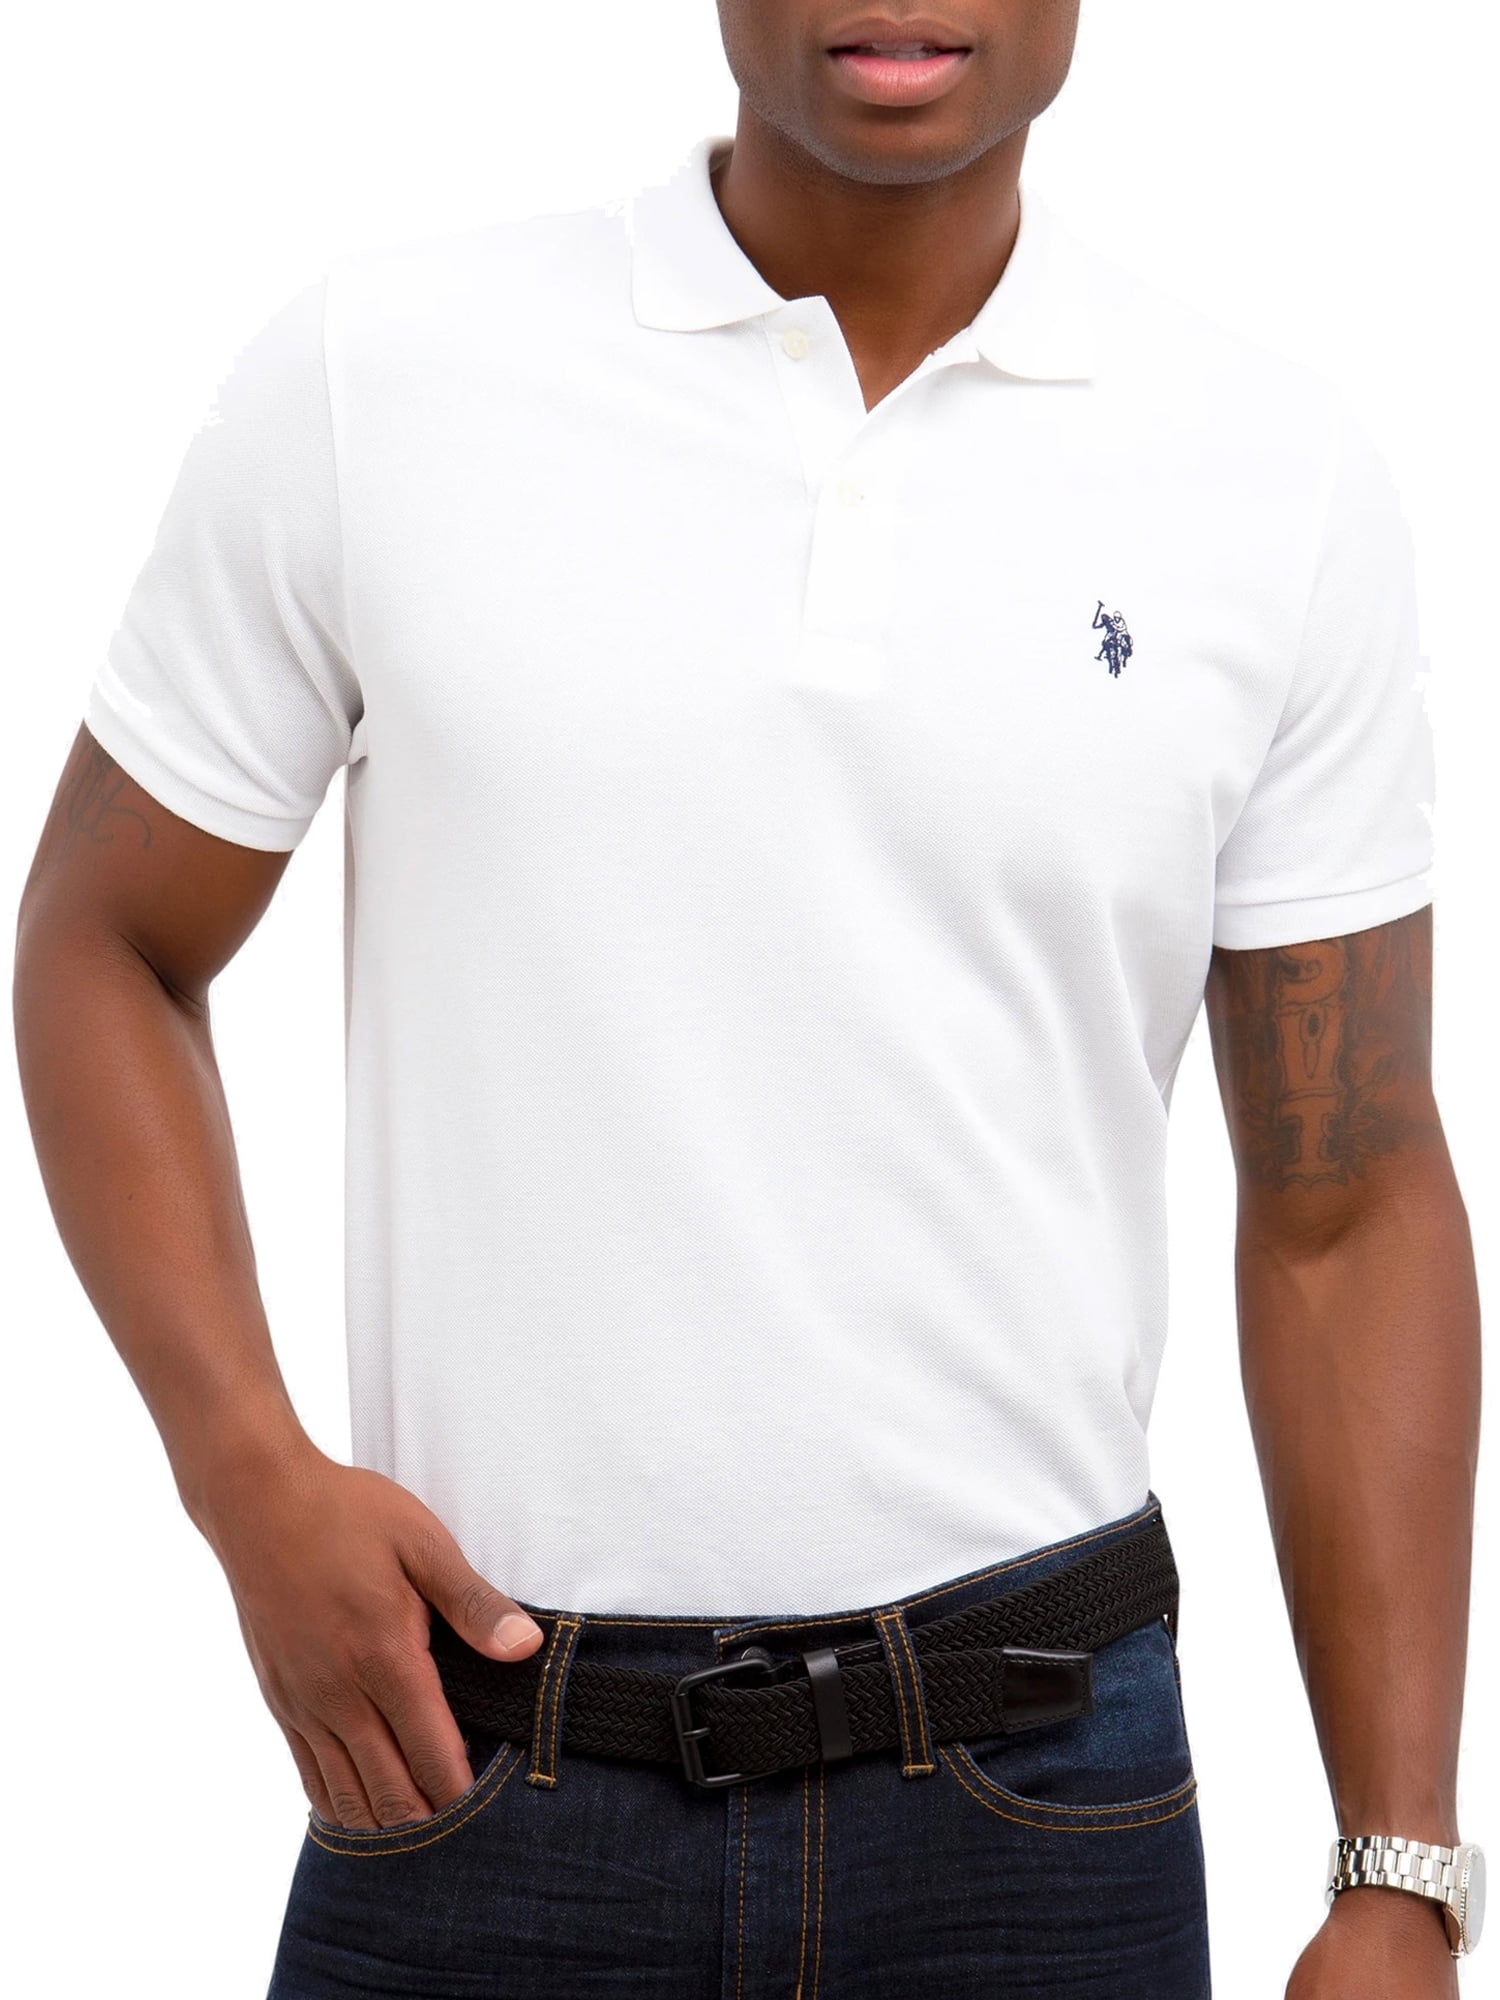 U.S Polo Assn Mens Slim Fit Color Block Short Sleeve Pique Polo Shirt 